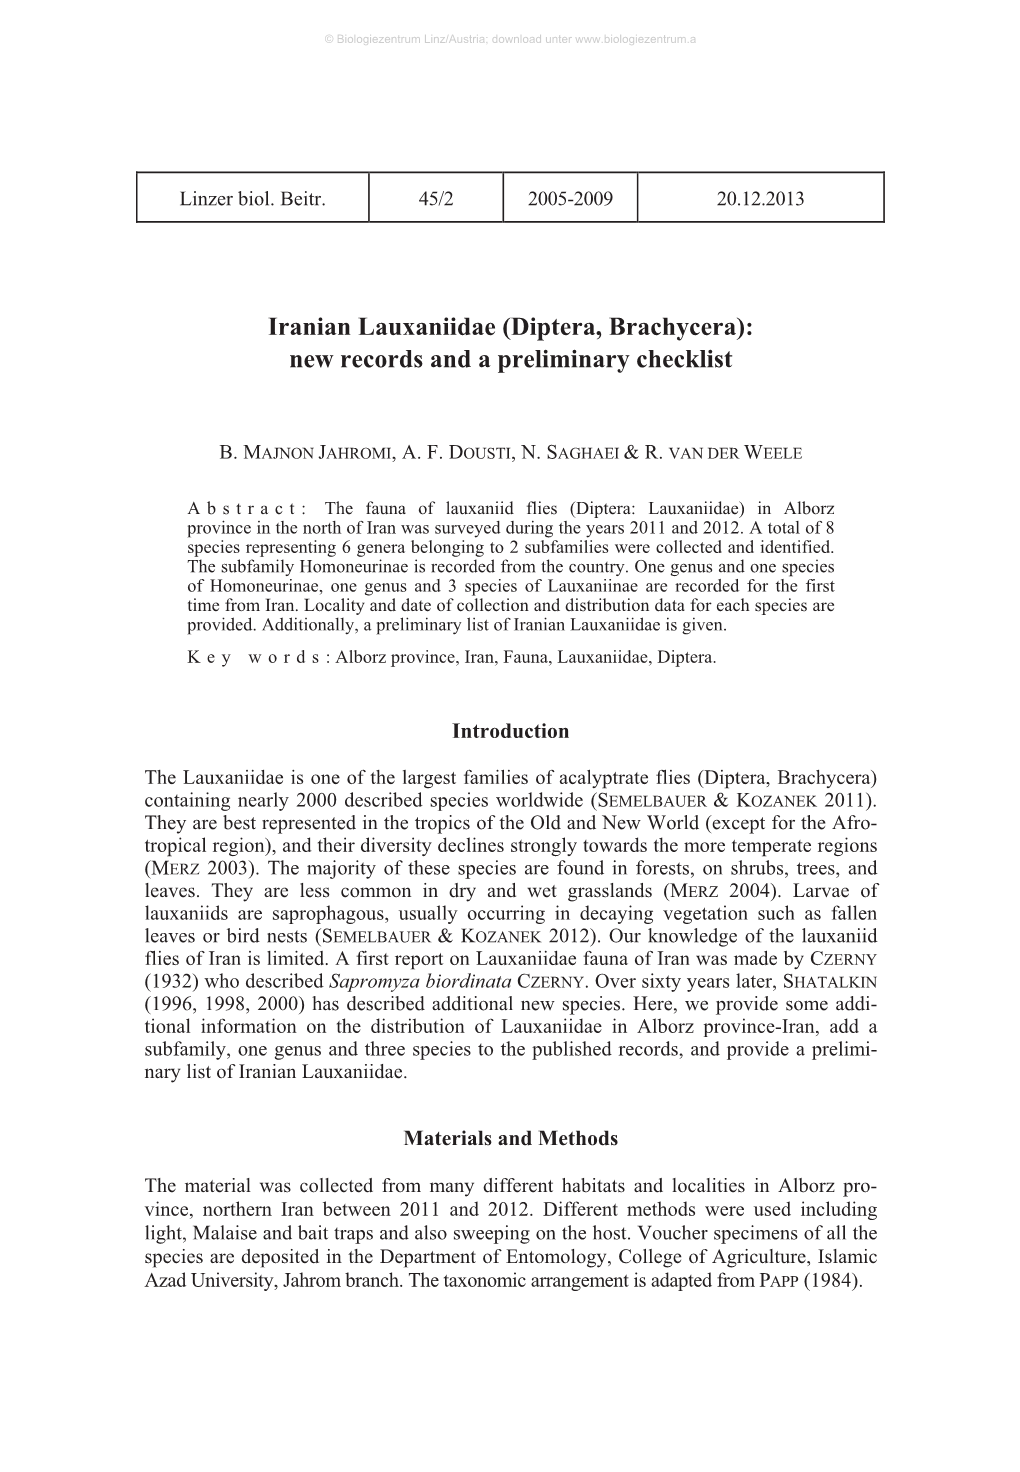 Iranian Lauxaniidae (Diptera, Brachycera): New Records and a Preliminary Checklist